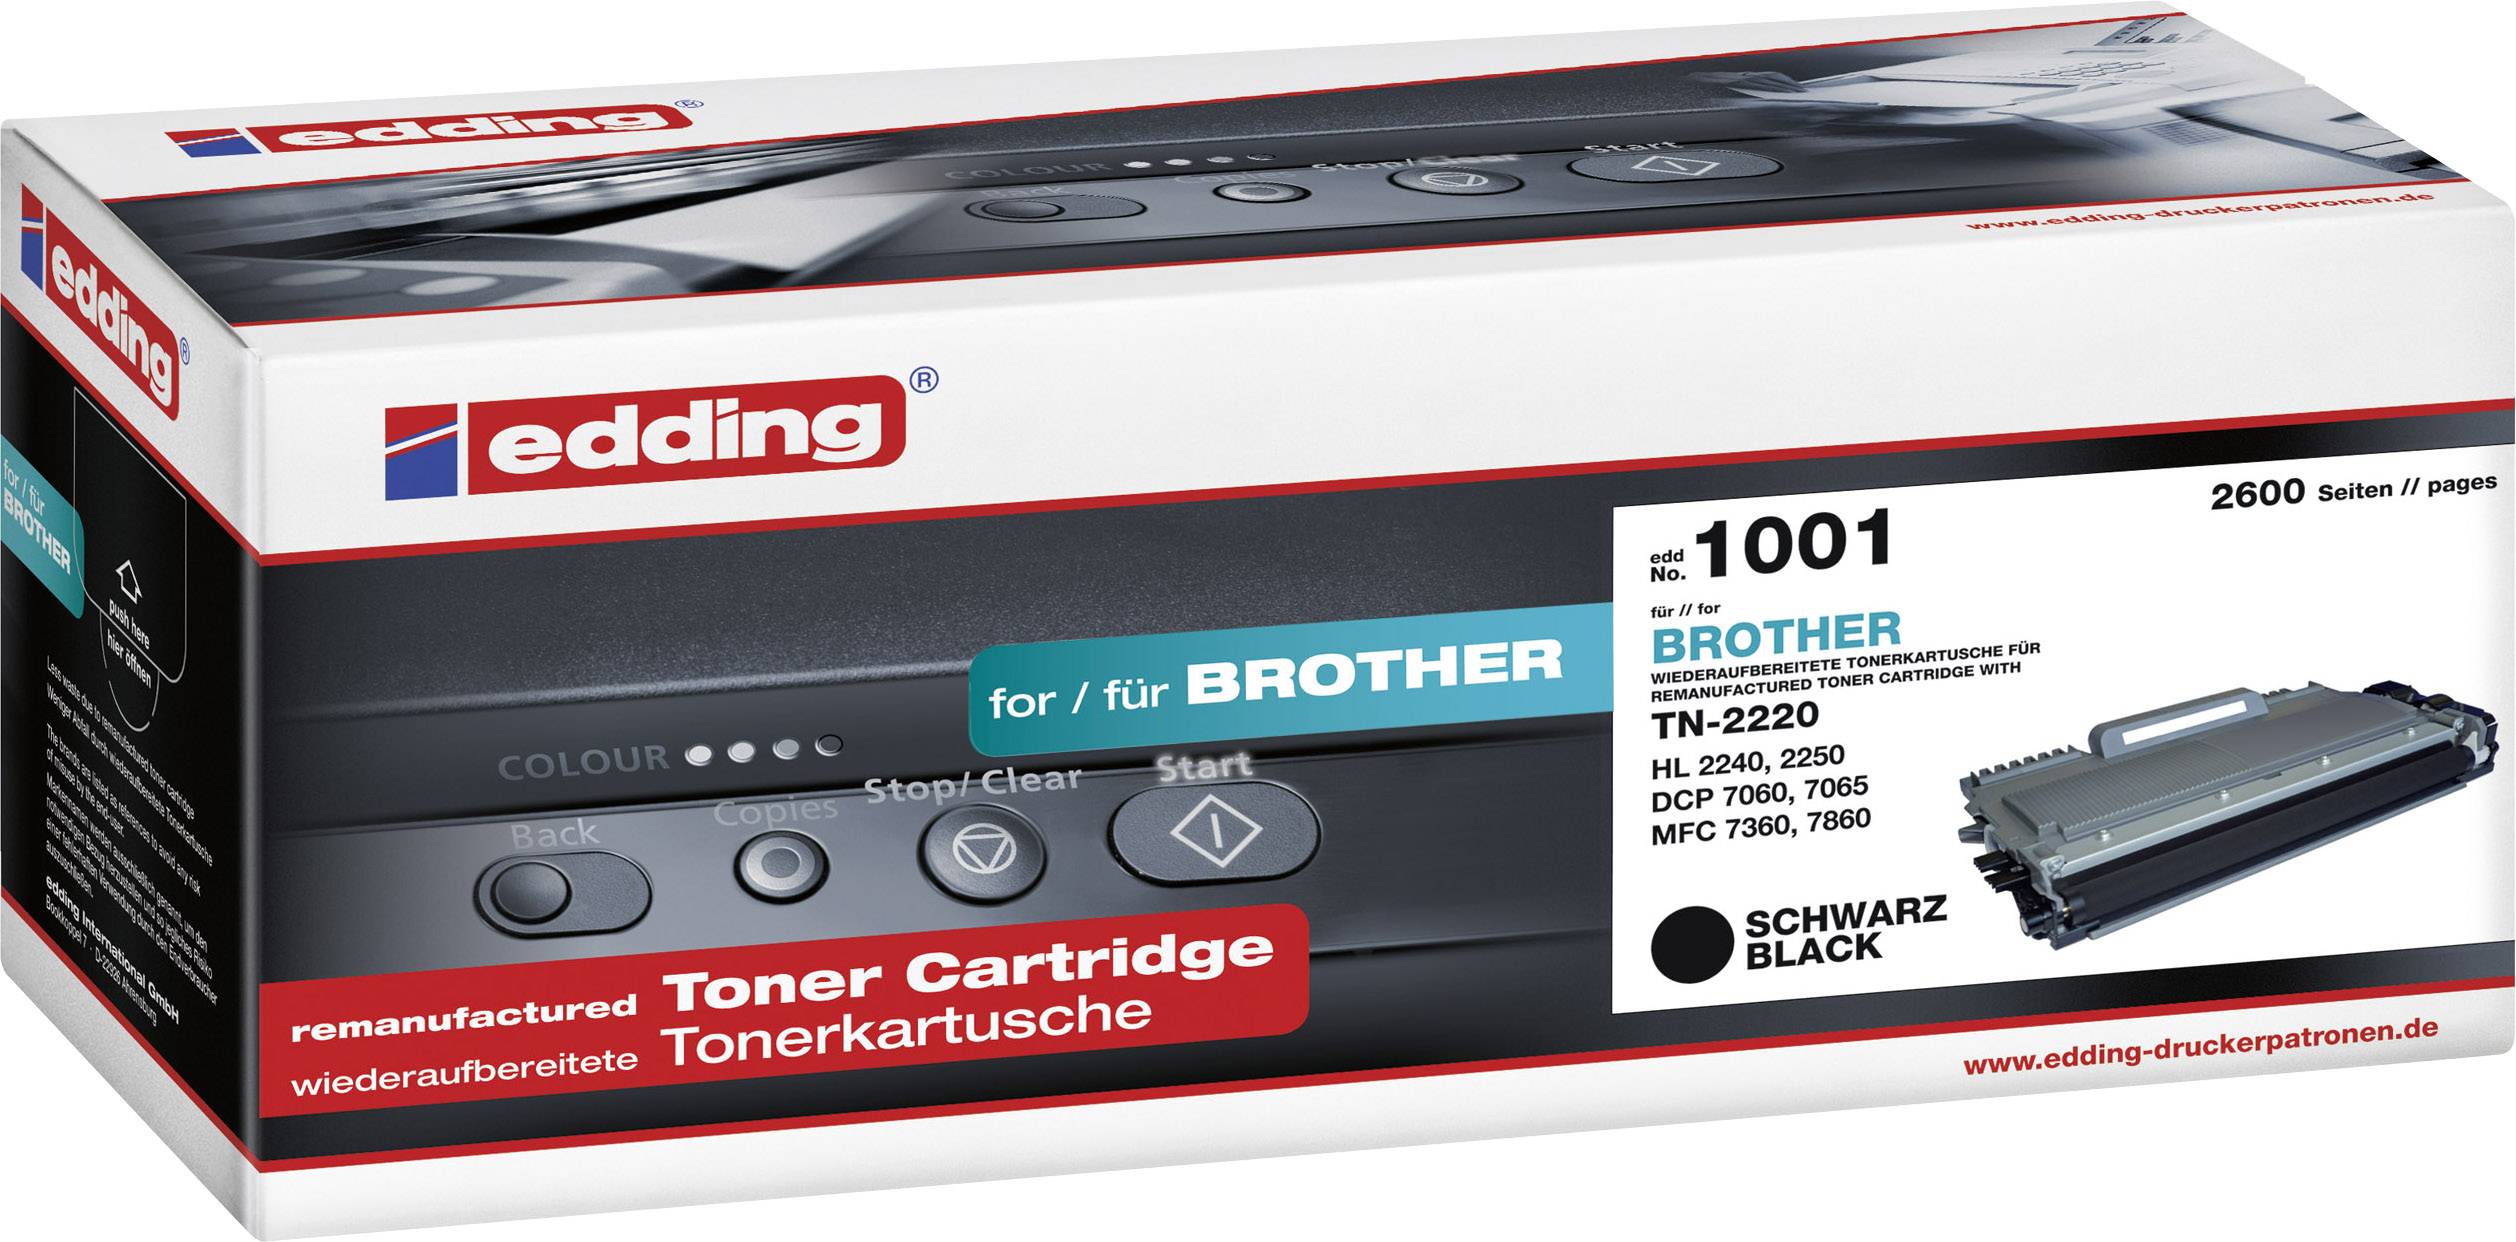 EDDING Toner ersetzt Brother TN-2210, TN-2220 Kompatibel Schwarz 2600 Seiten EDD-1001